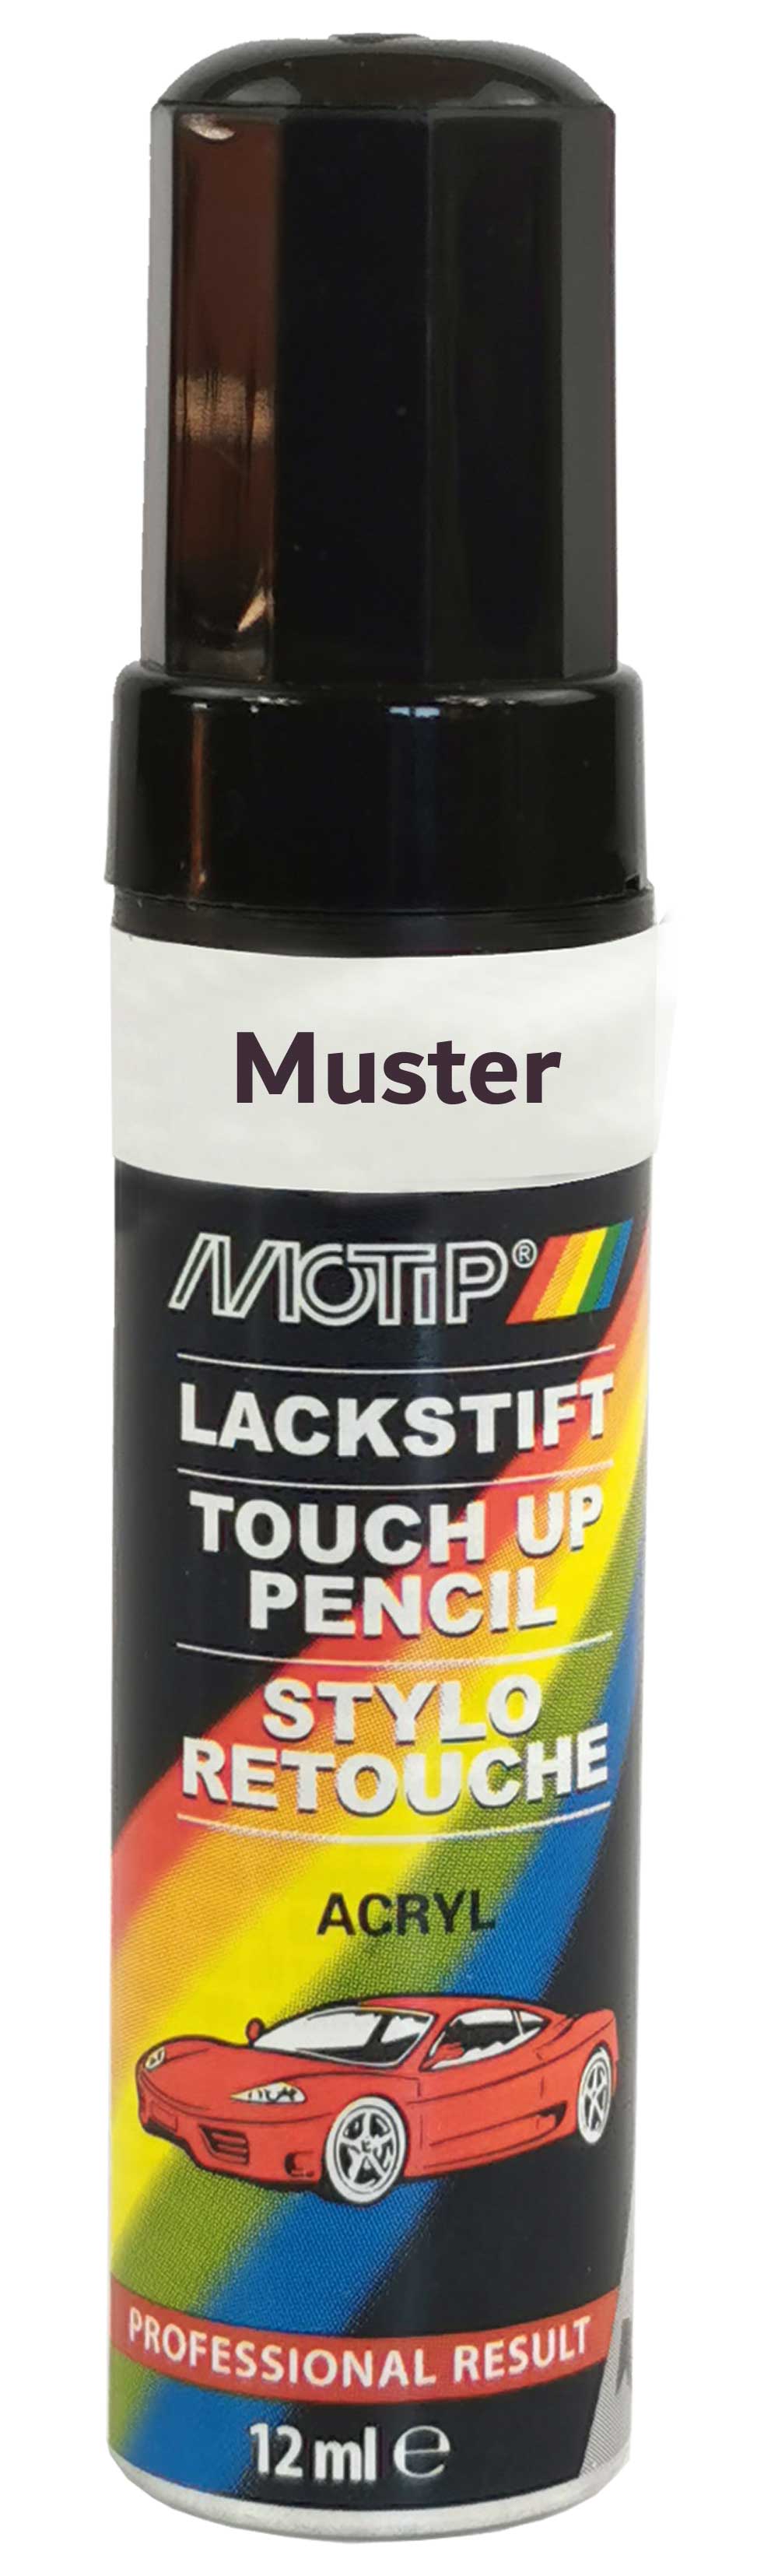 Motip Lack-Stift blau 12ml 954866